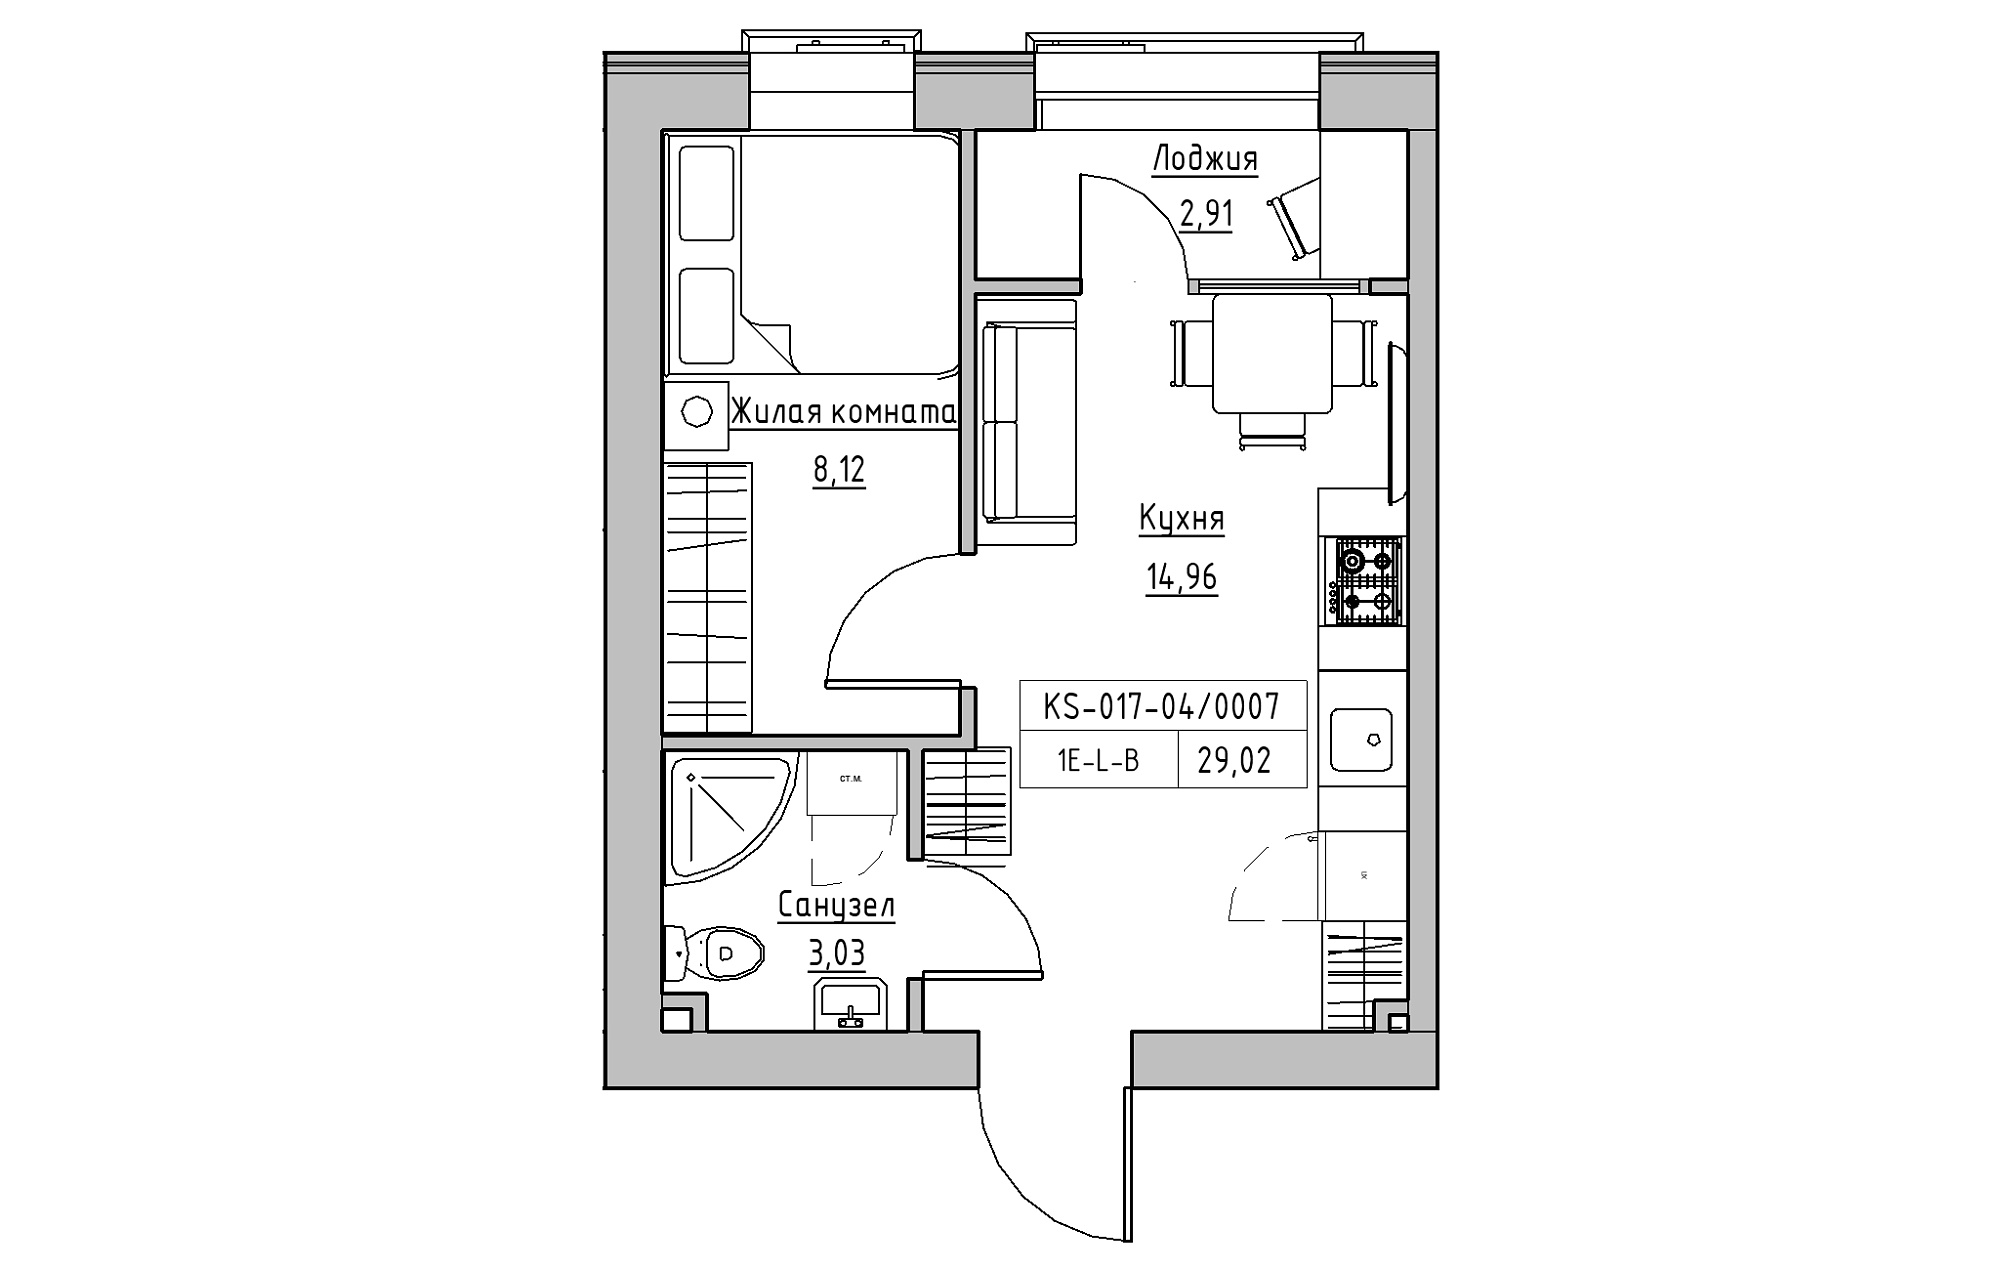 Planning 1-rm flats area 29.02m2, KS-017-04/0007.